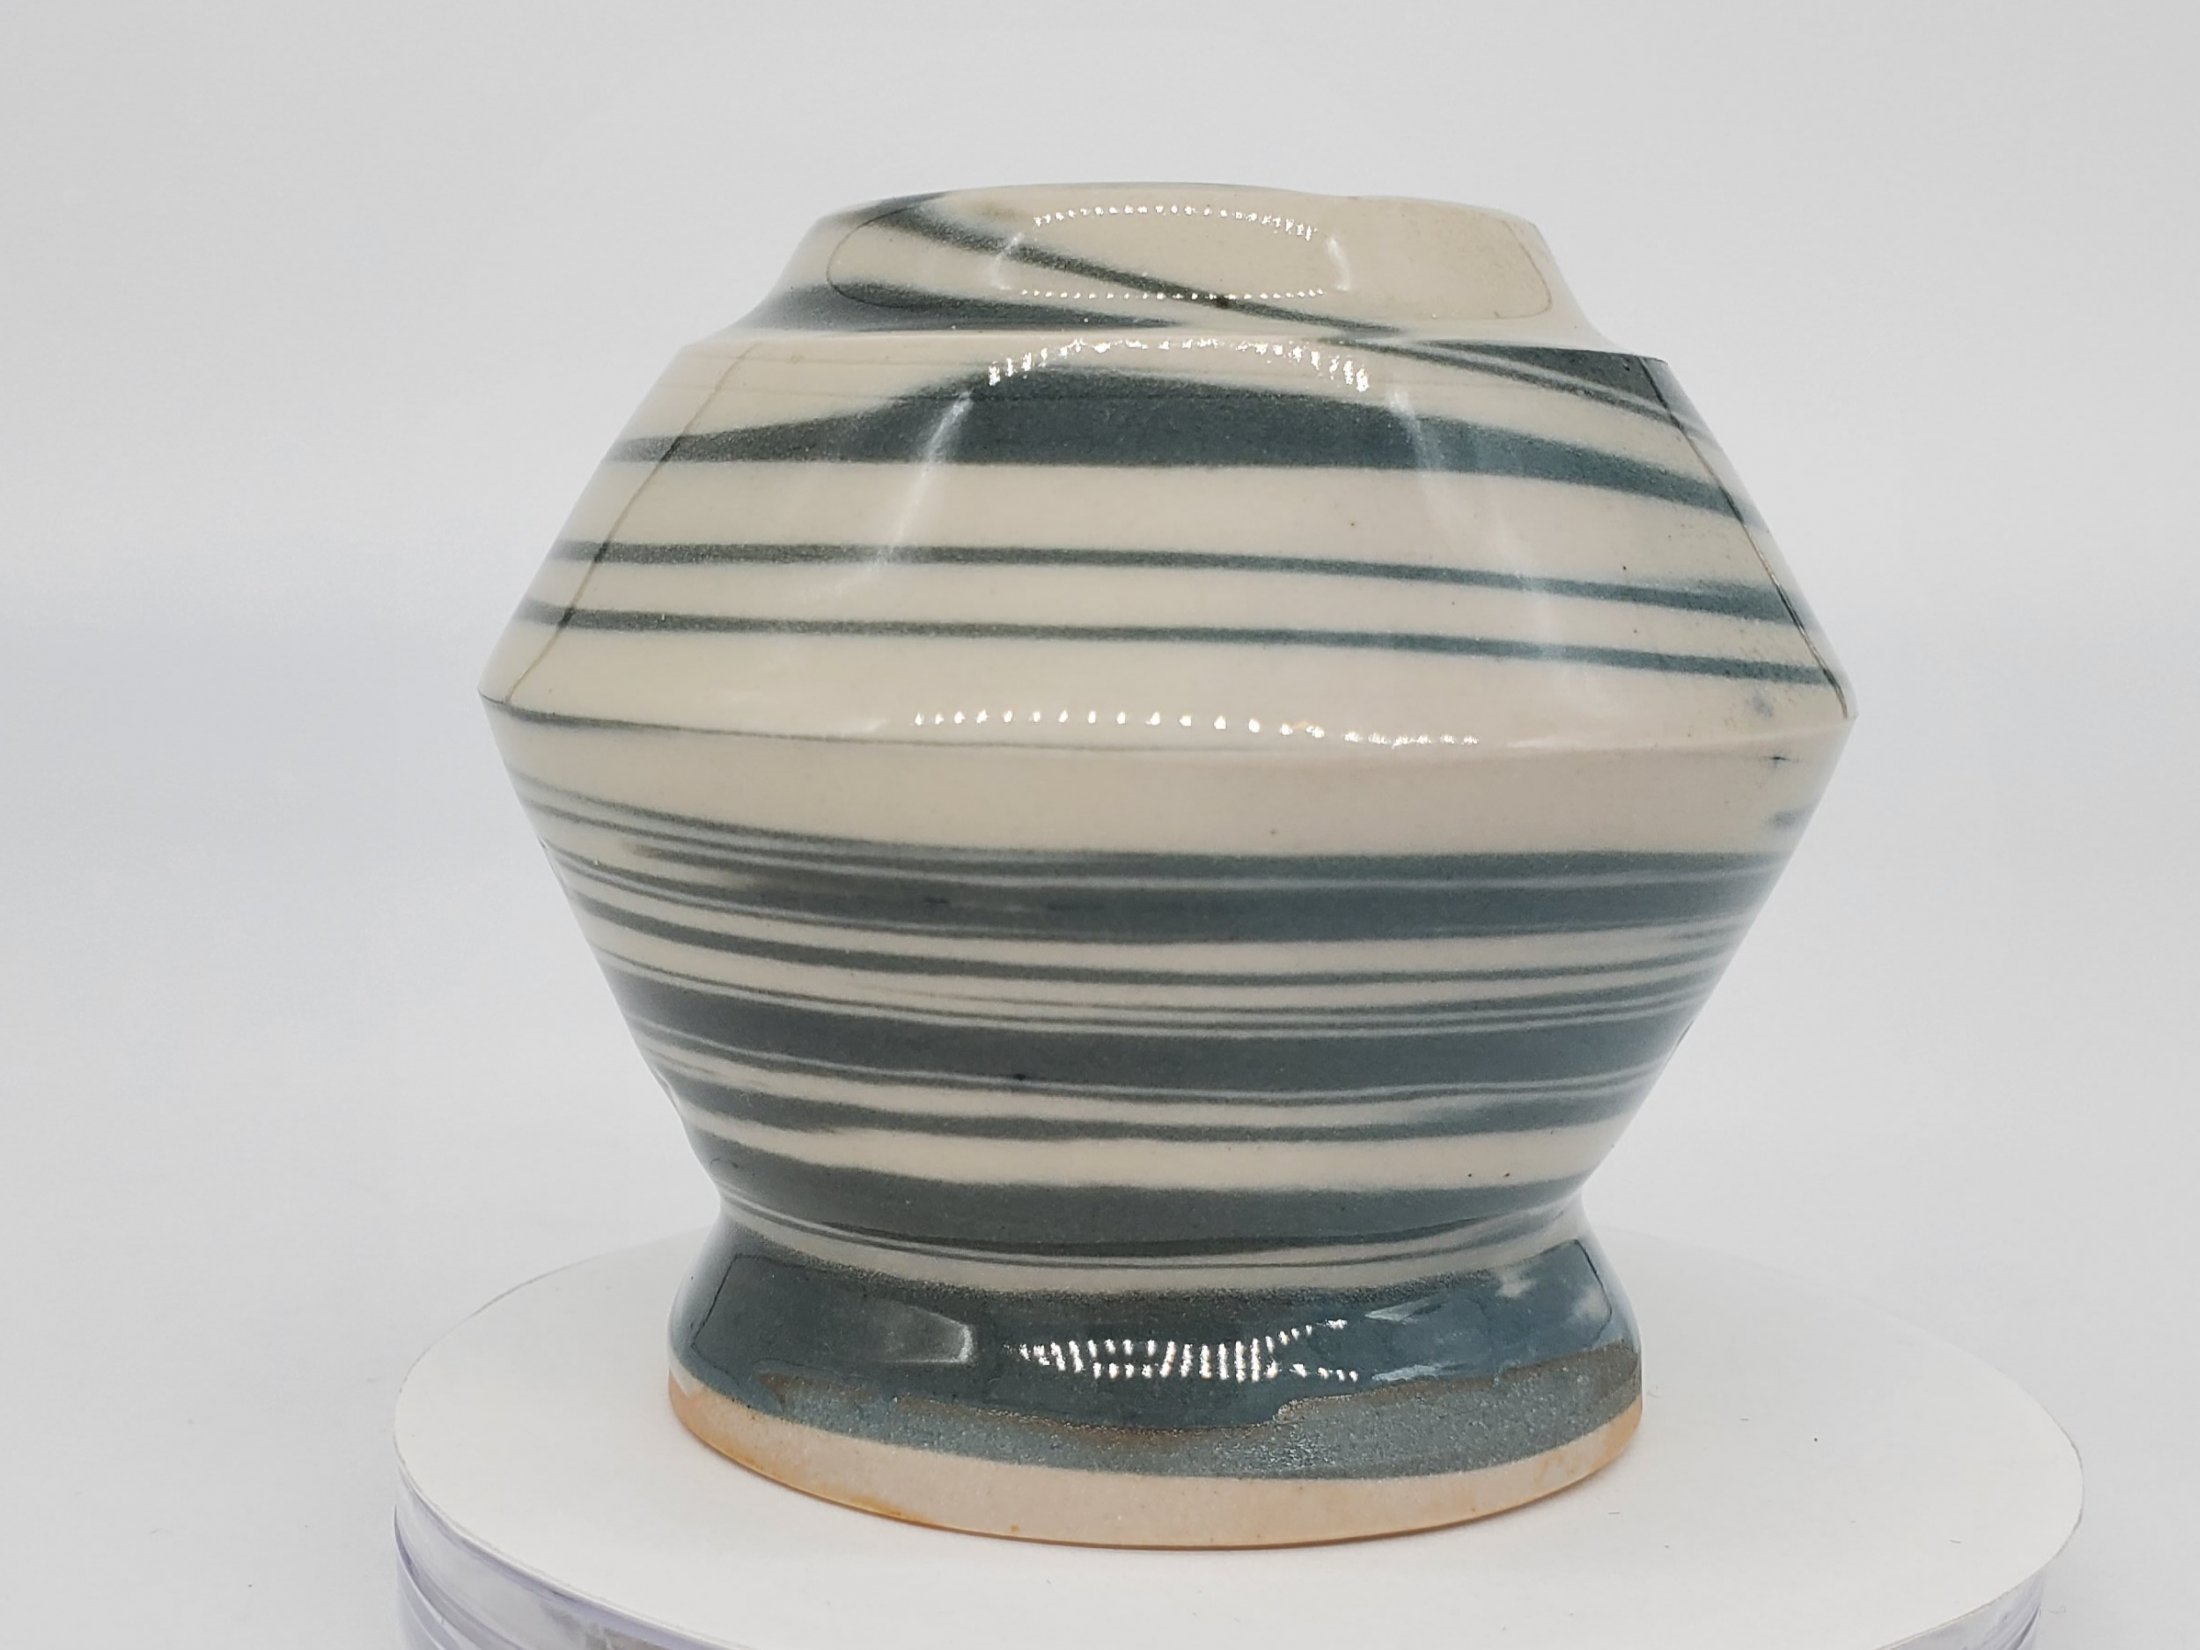 Tiny Angular Pretty Mason Stain & Clear Glaze Carved Vase